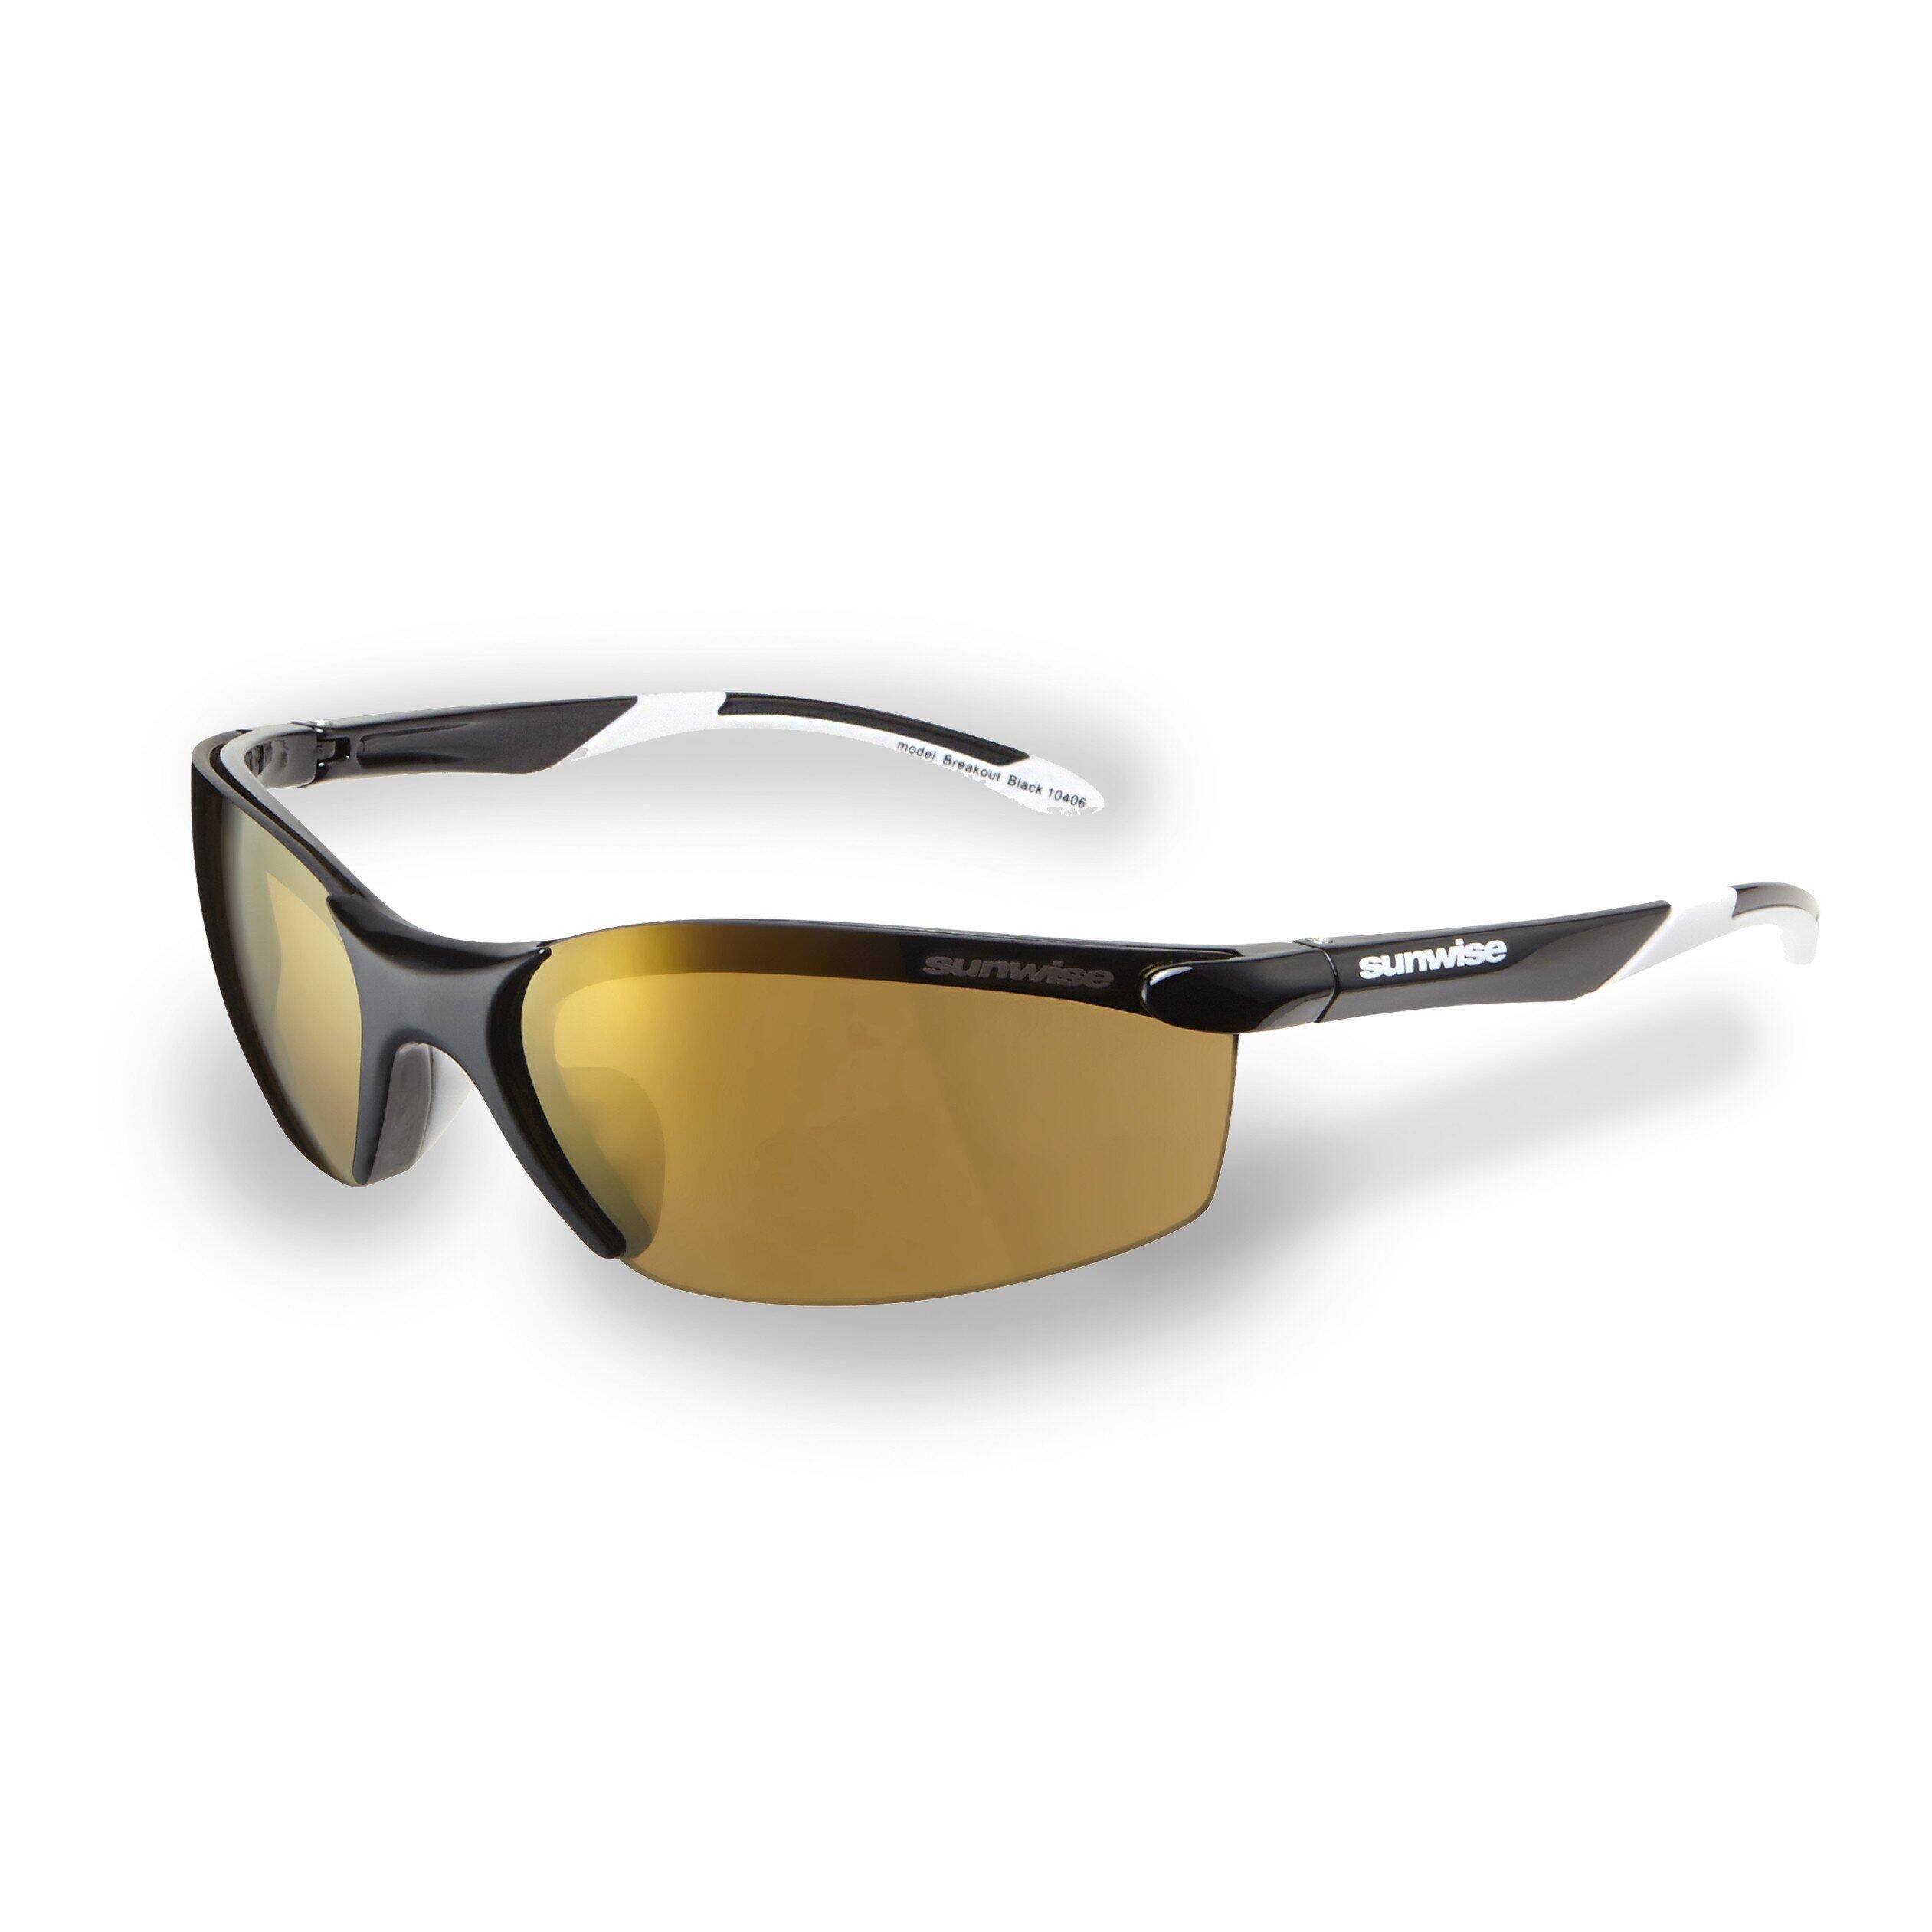 SUNWISE Breakout Sports Sunglasses - Category 3